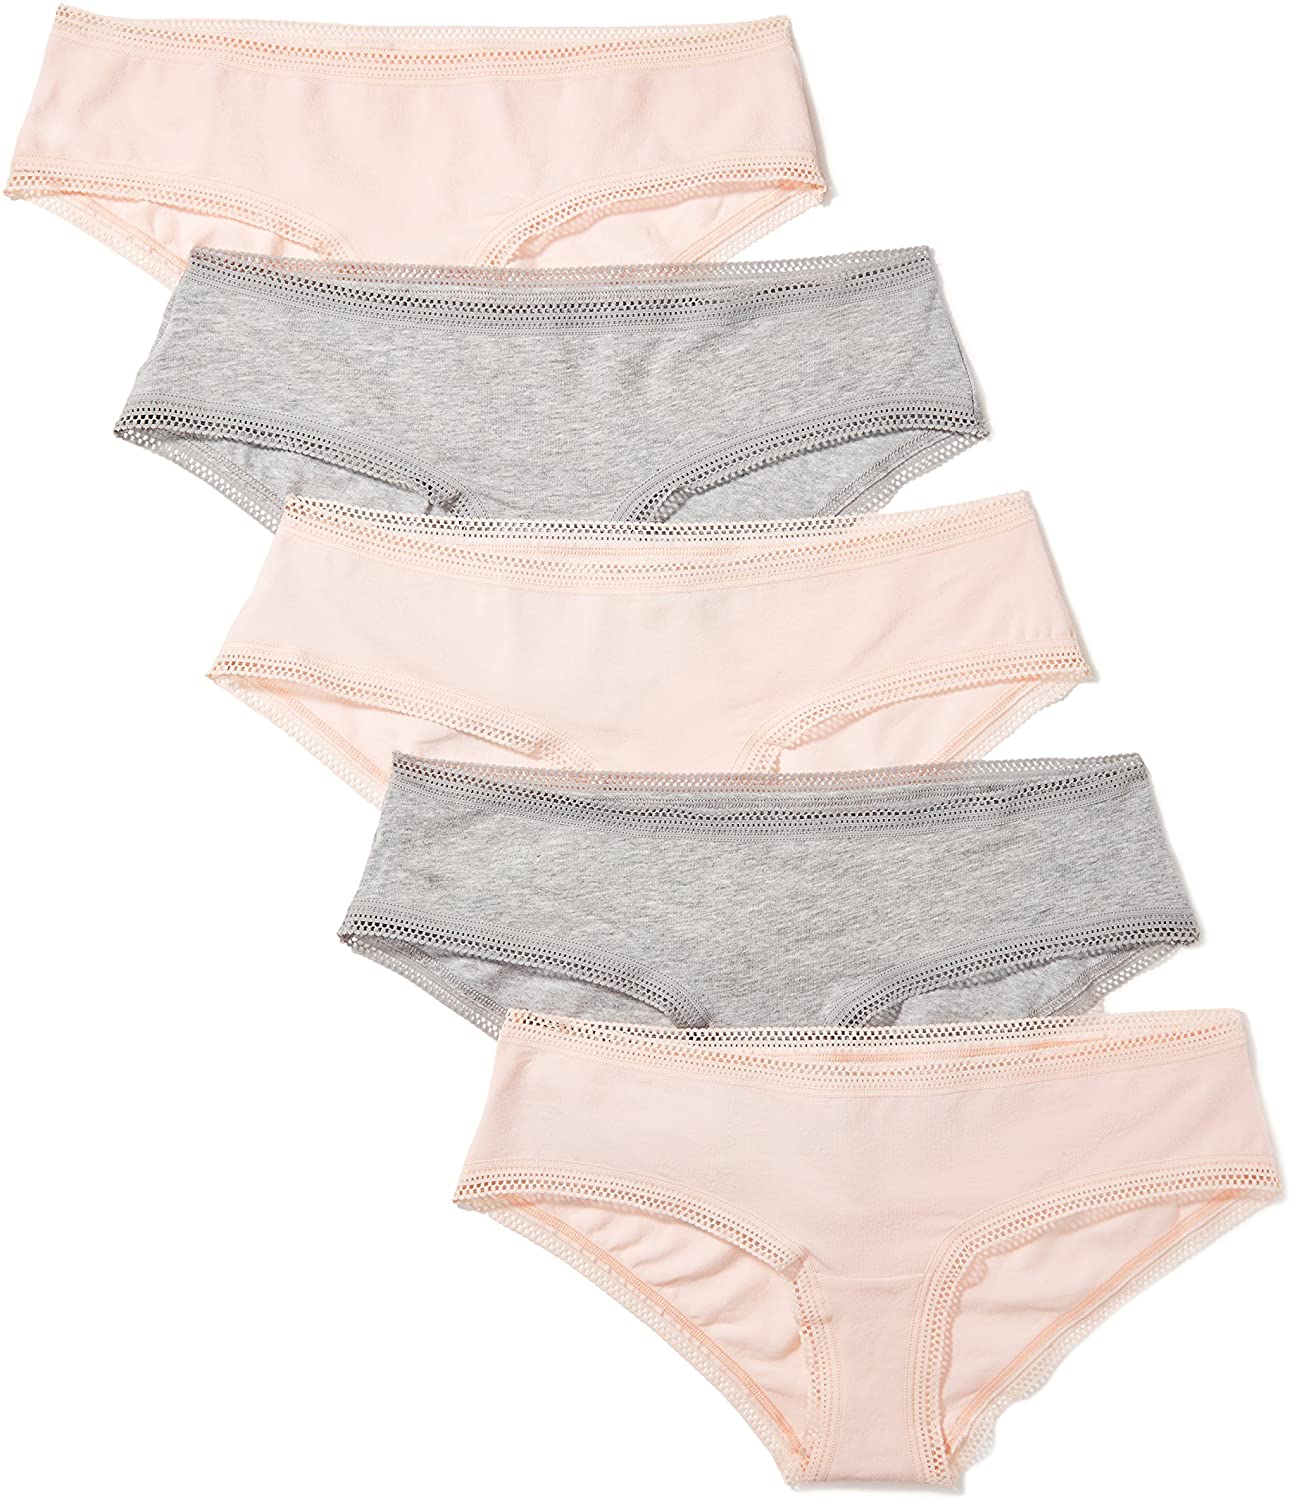 Price:$10.08    Amazon Brand - Iris & Lilly Women's Cotton Lace Trim Boy Short Panty, 5-Pack  Clothing